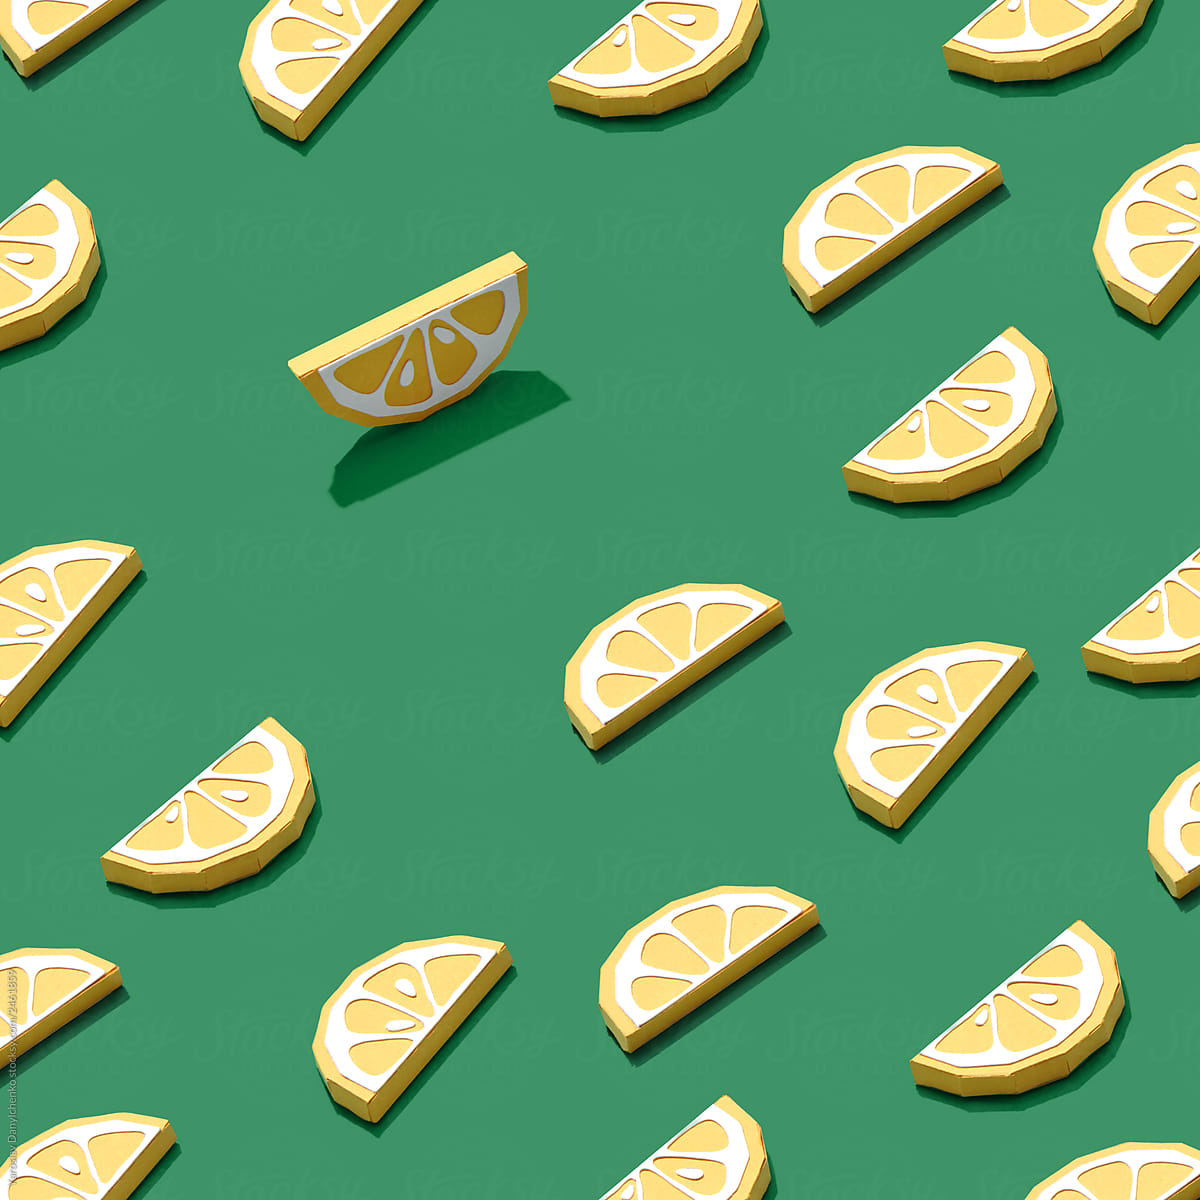 Handcraft paper pieces of ripe lemon